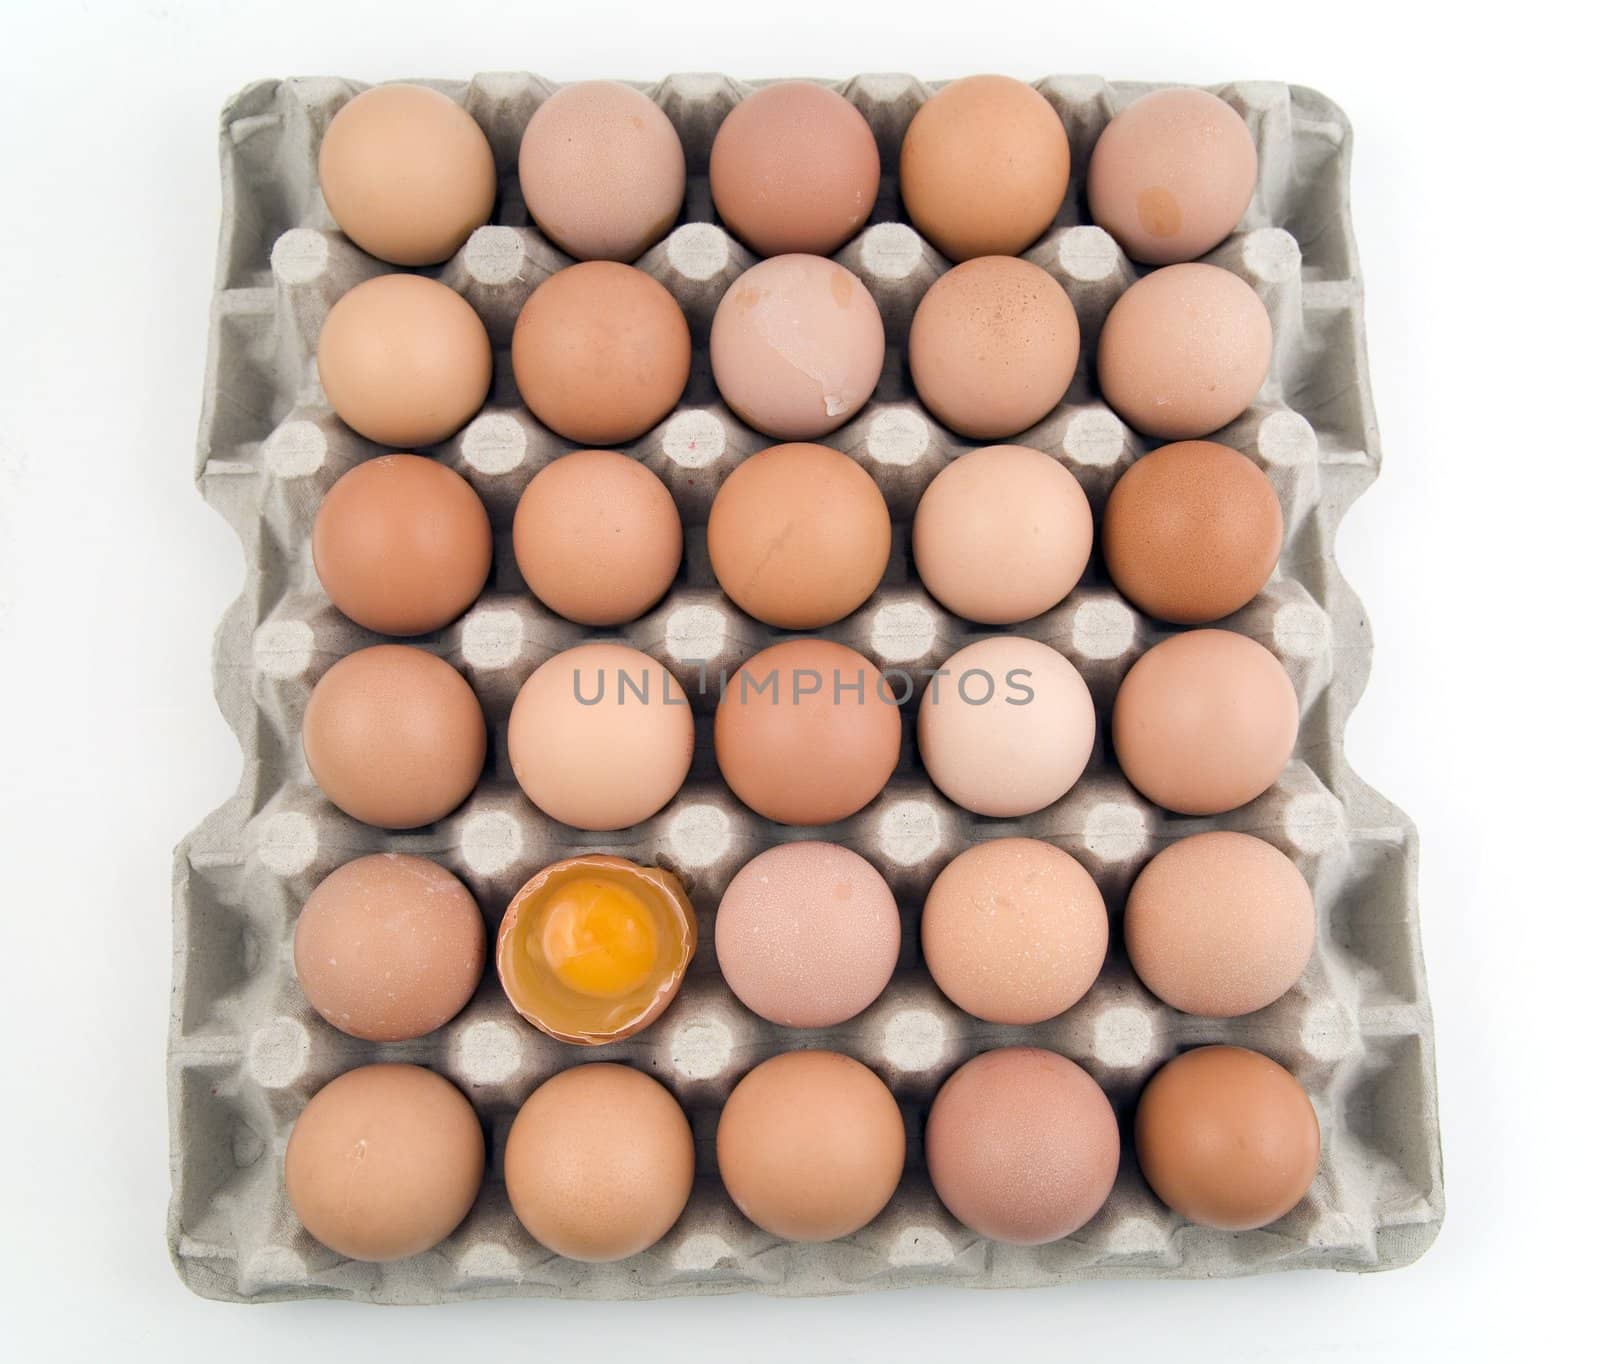 plenty of eggs with one opened egg